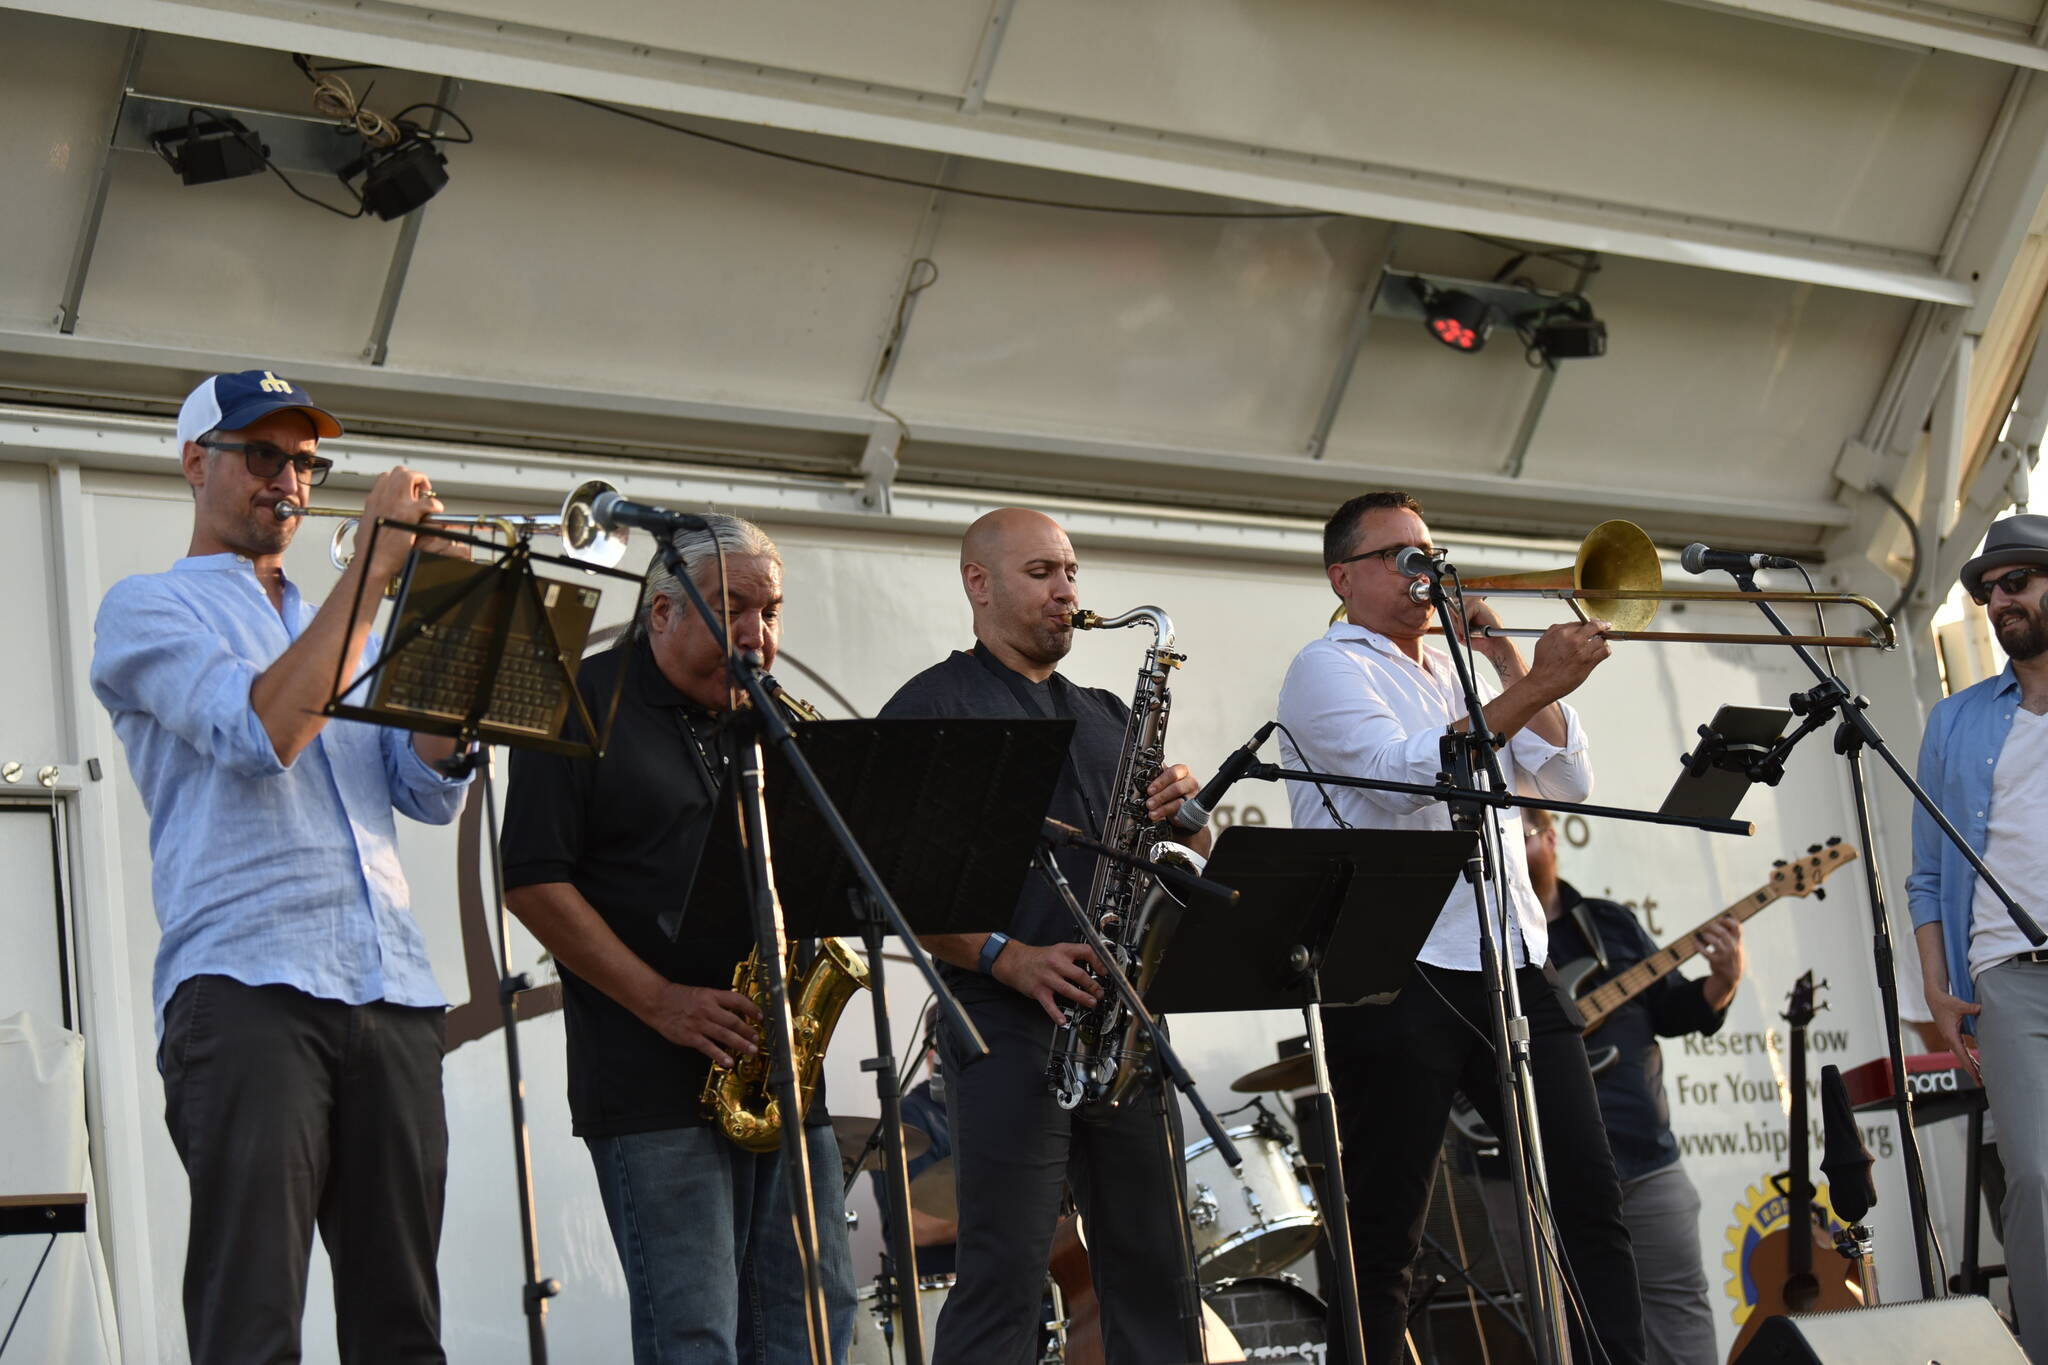 The Backstreet Jellyroll band plays Van Morrison tunes at Battle Point Park.